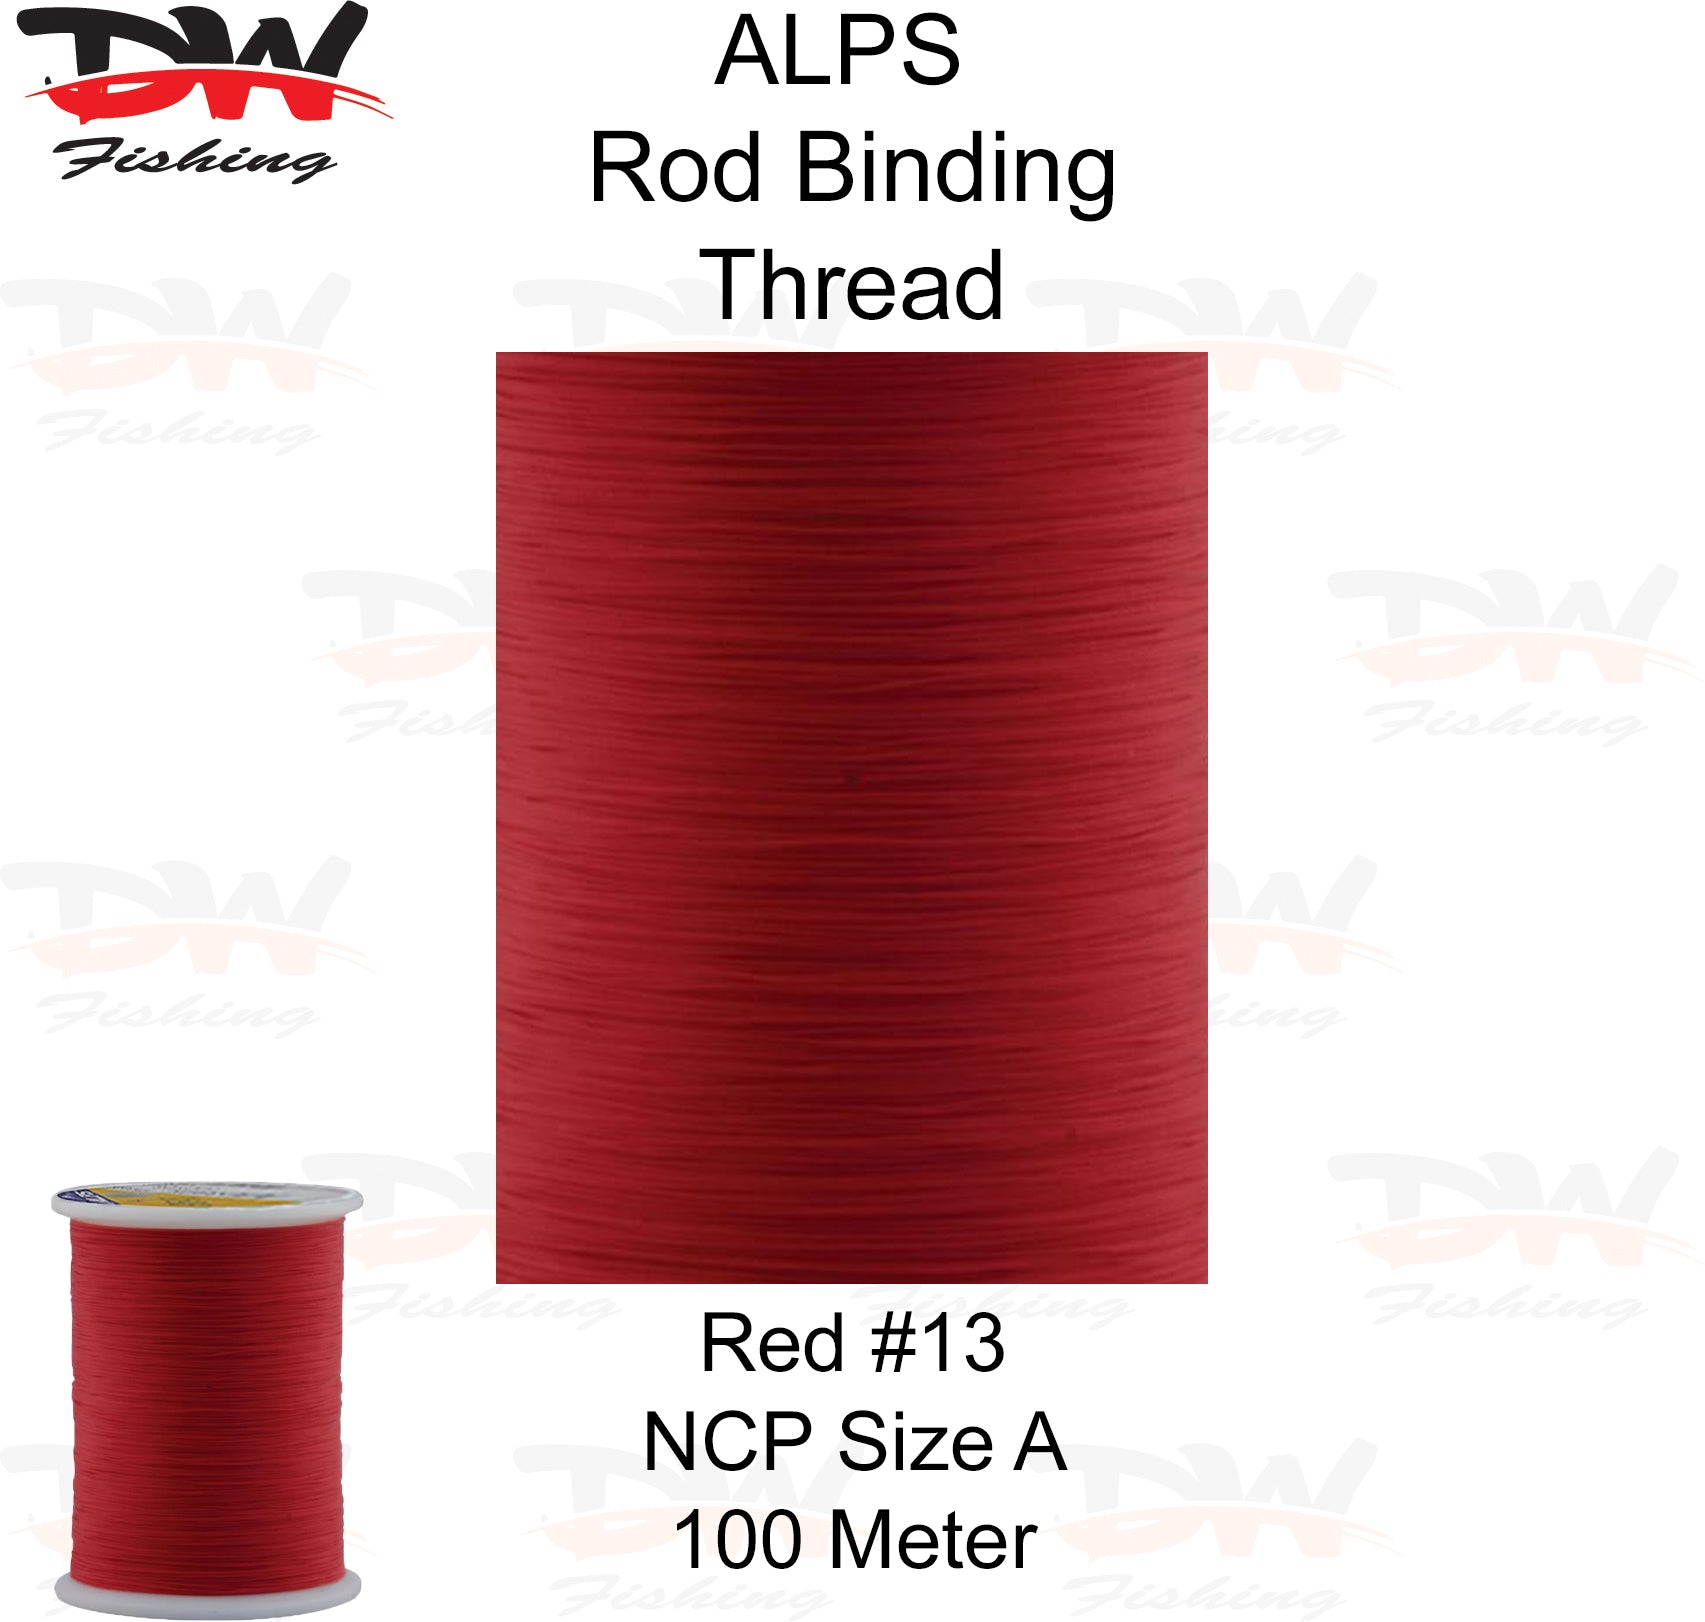 ALPS nylon rod binding thread red